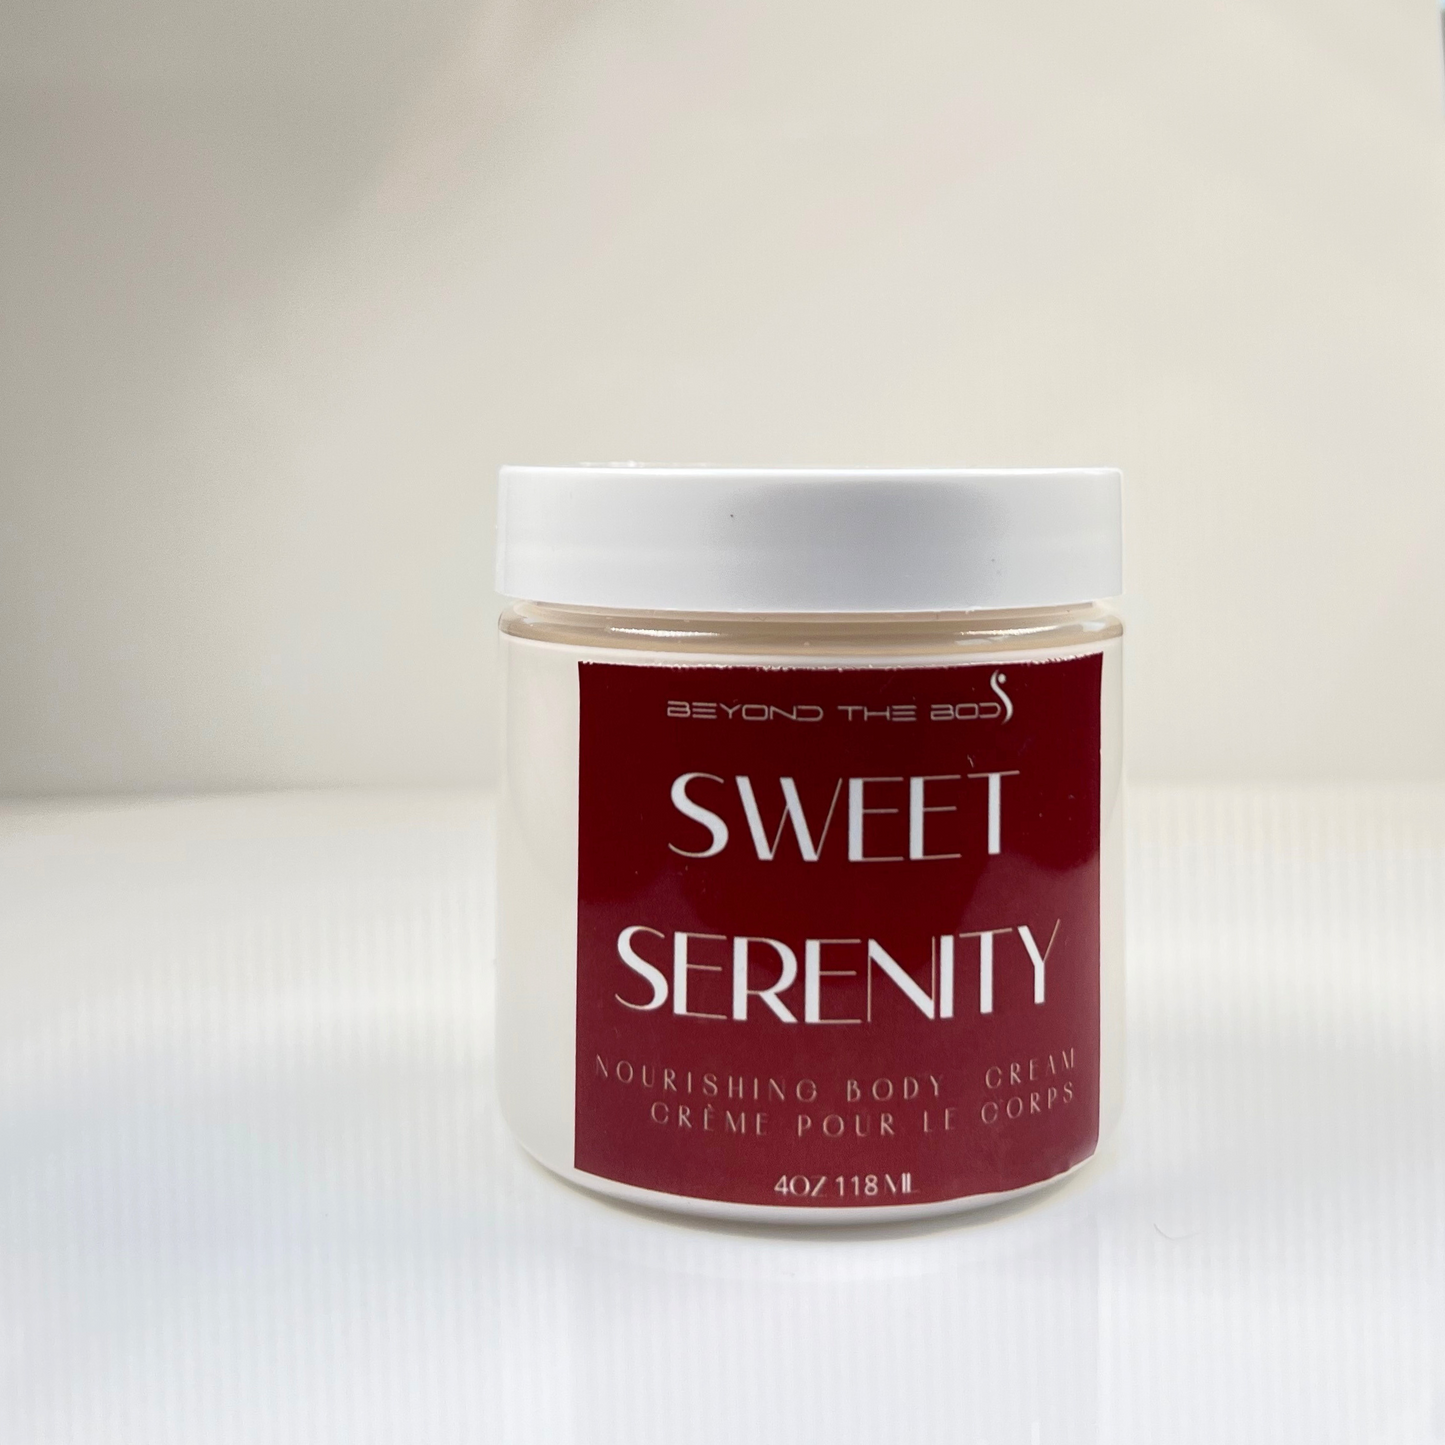 Sweet Serenity Bodi Cream